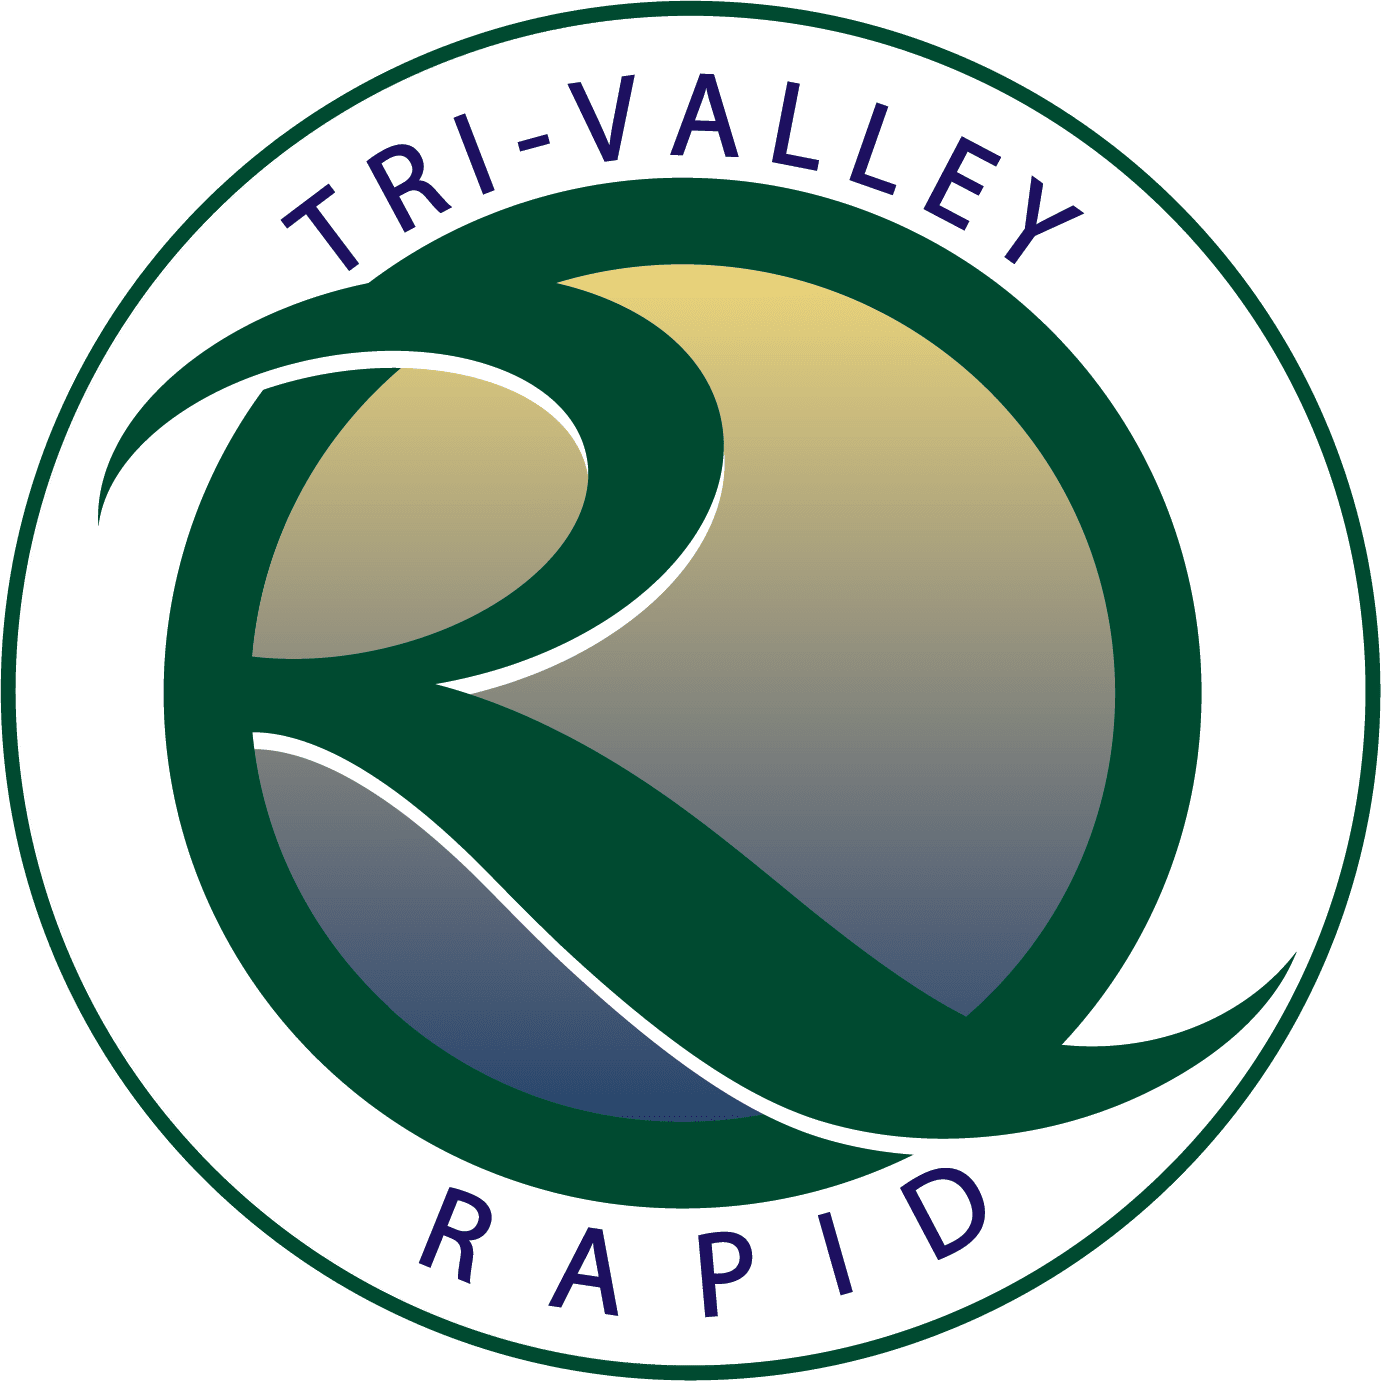 Tri Valley Wheels Rapid